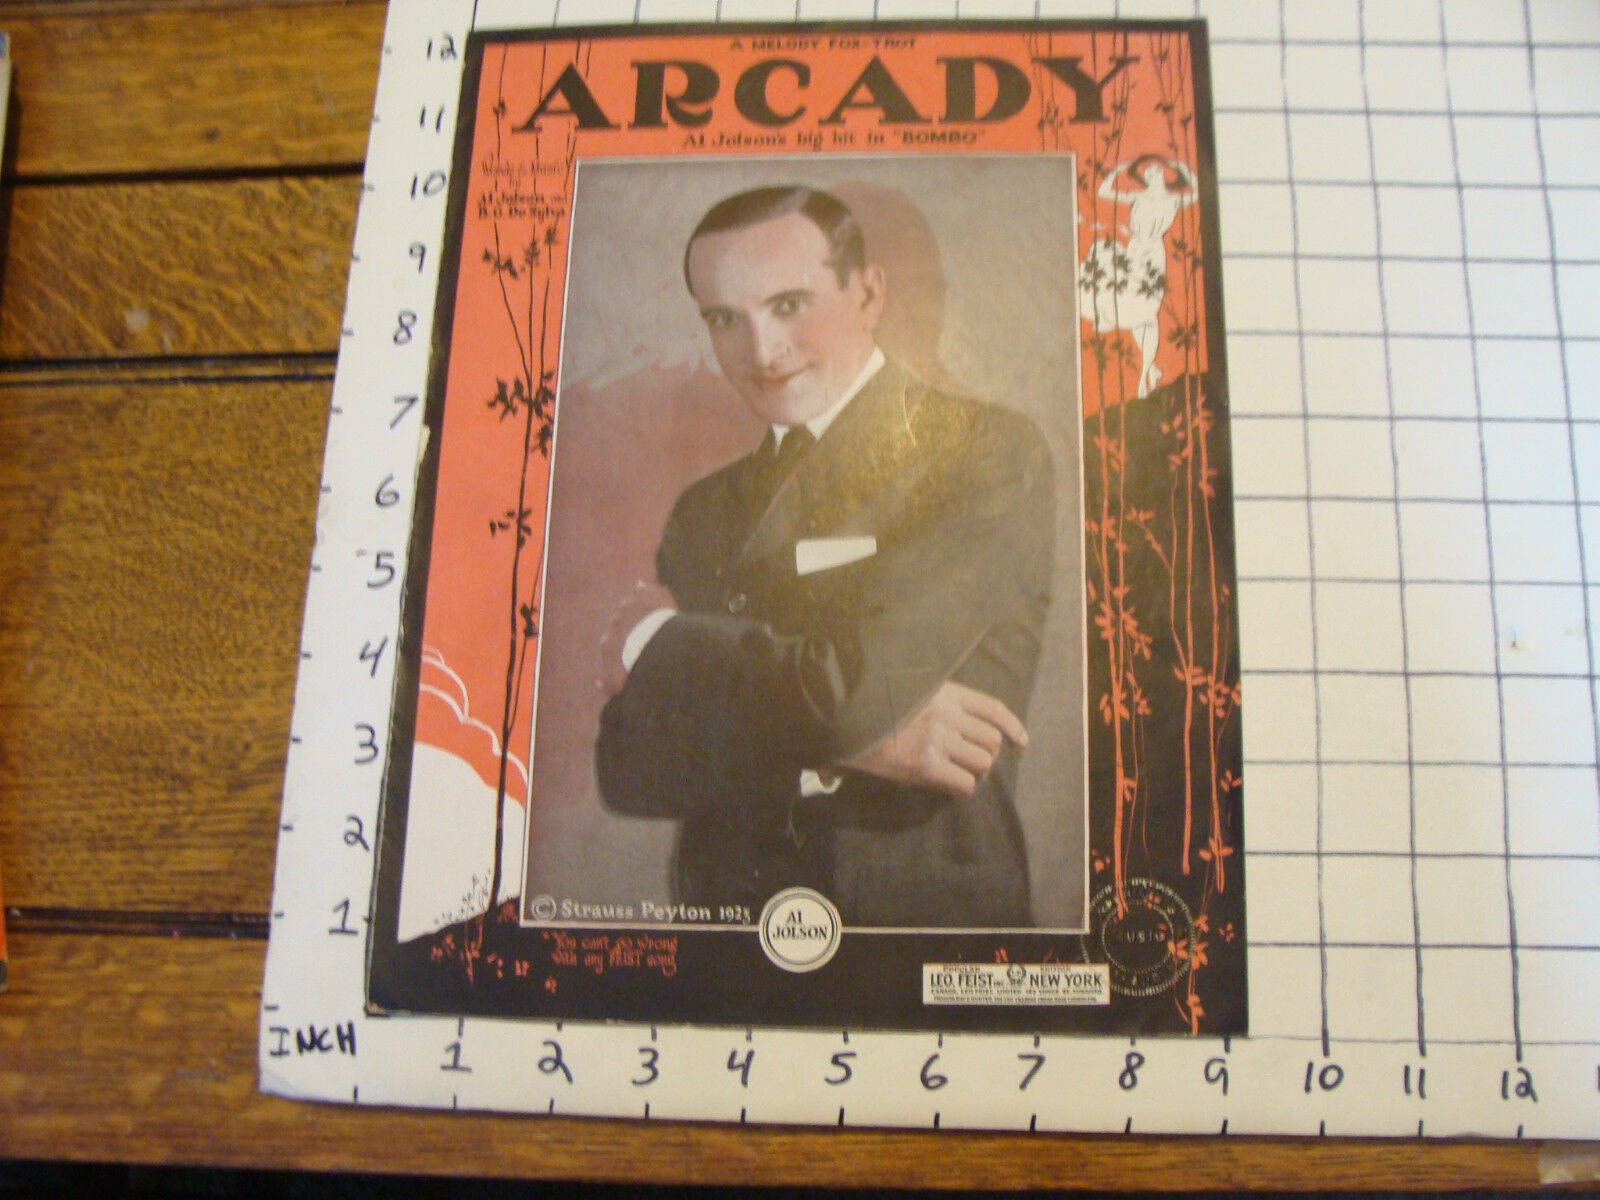 Al Jolson Arcady Album Cover Wallpaper